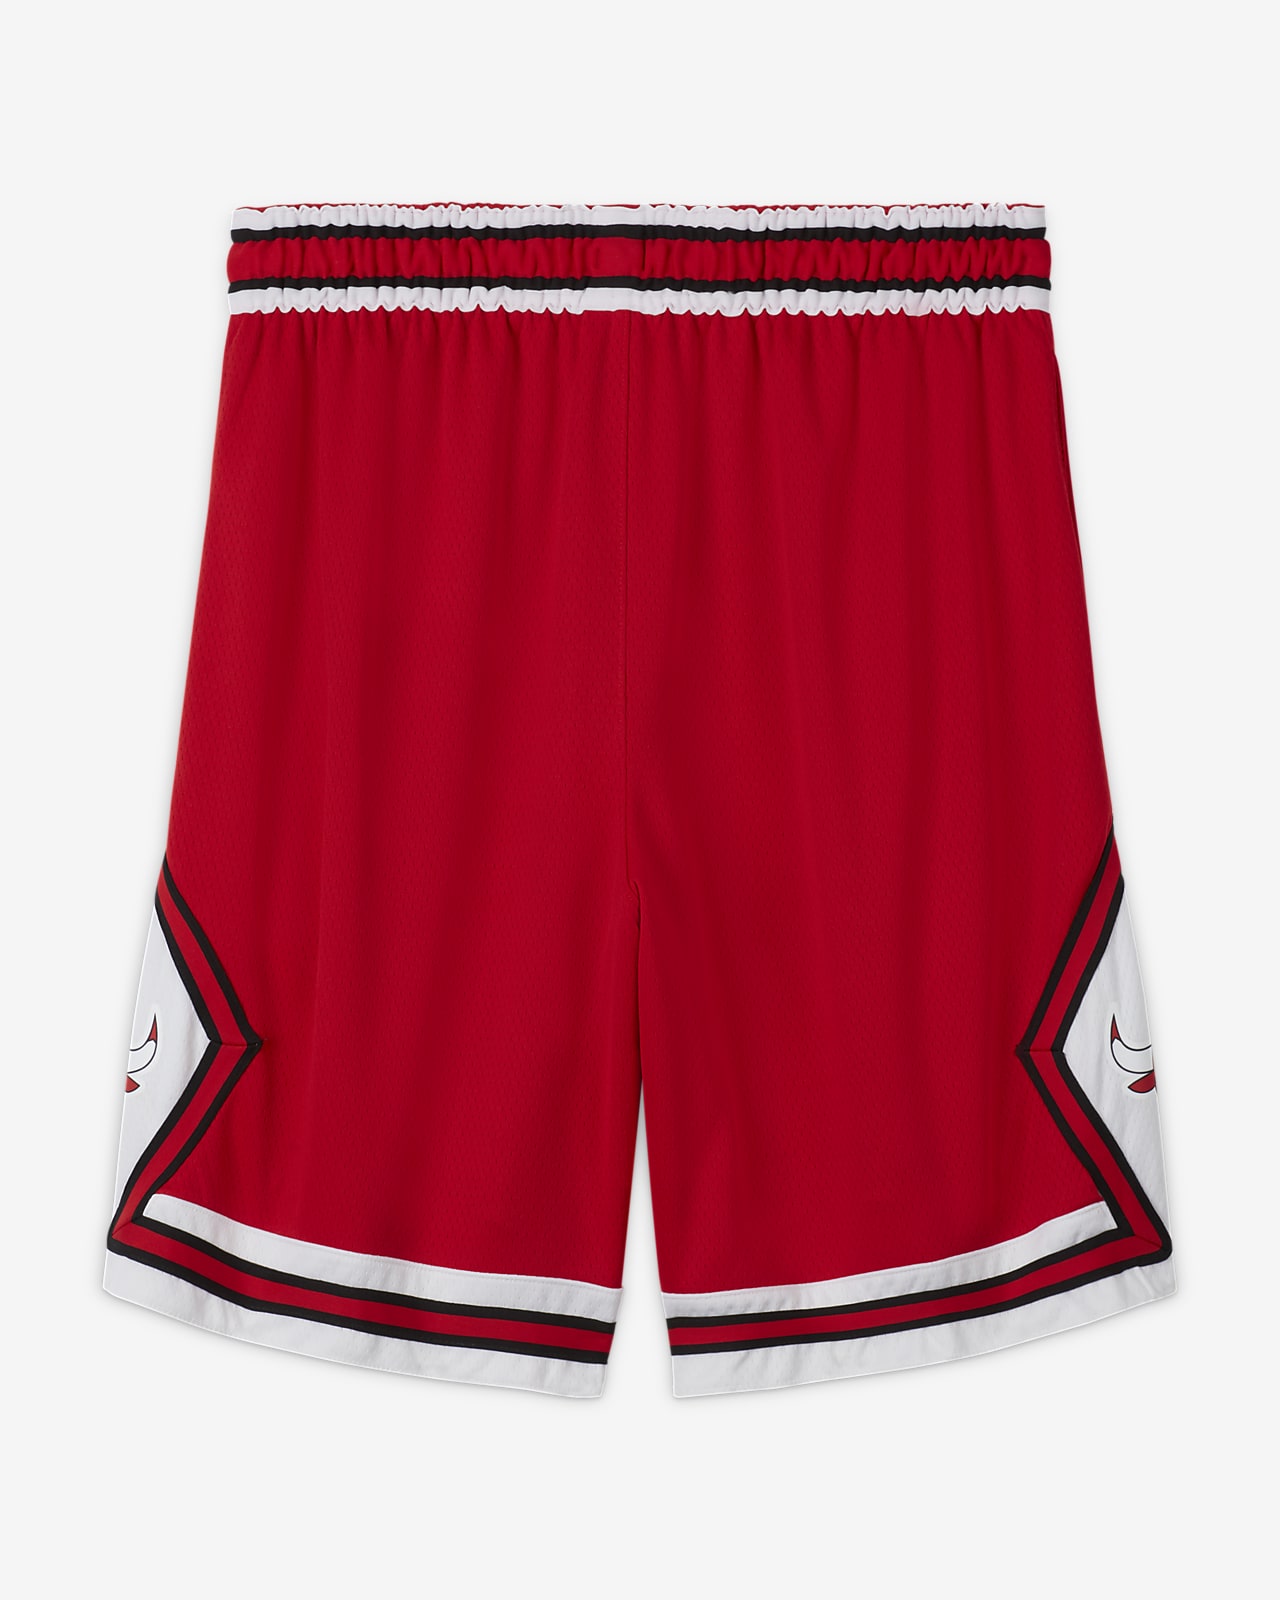 Gold Logo Retro Chicago Bulls Shorts Herren Stitched Basketball Shorts Neu 